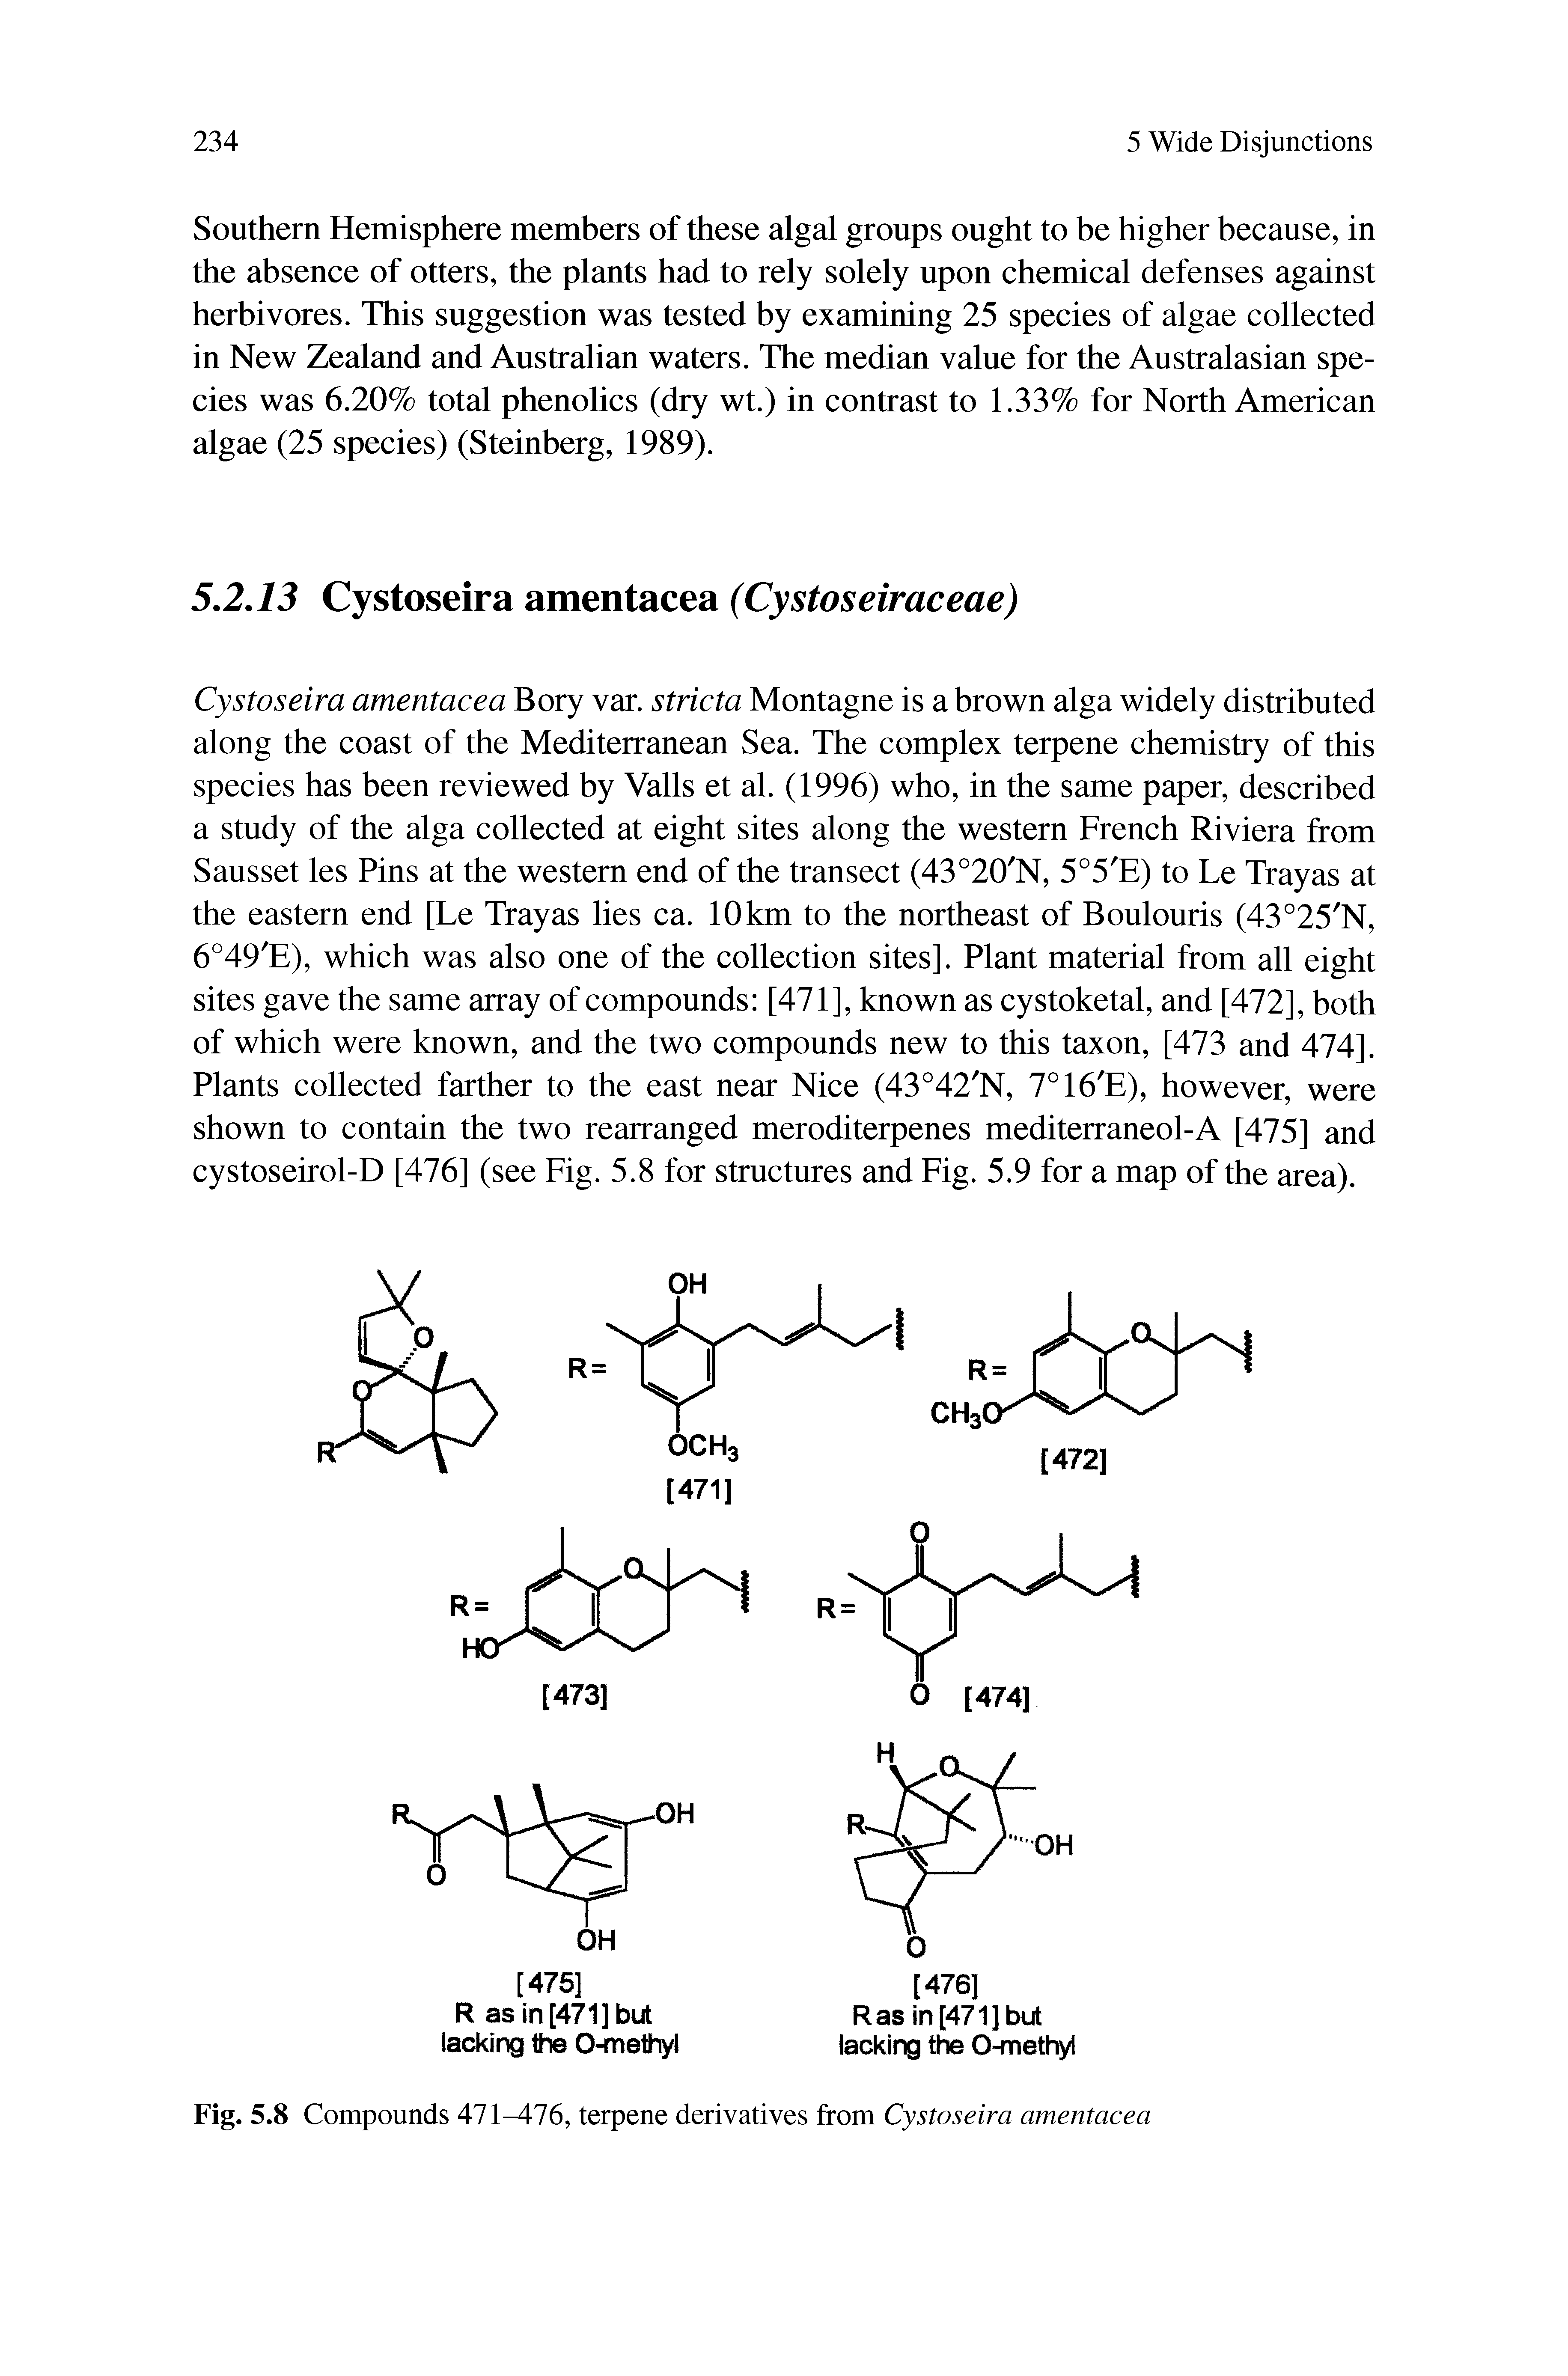 Fig. 5.8 Compounds 471-476, terpene derivatives from Cystoseira amentacea...